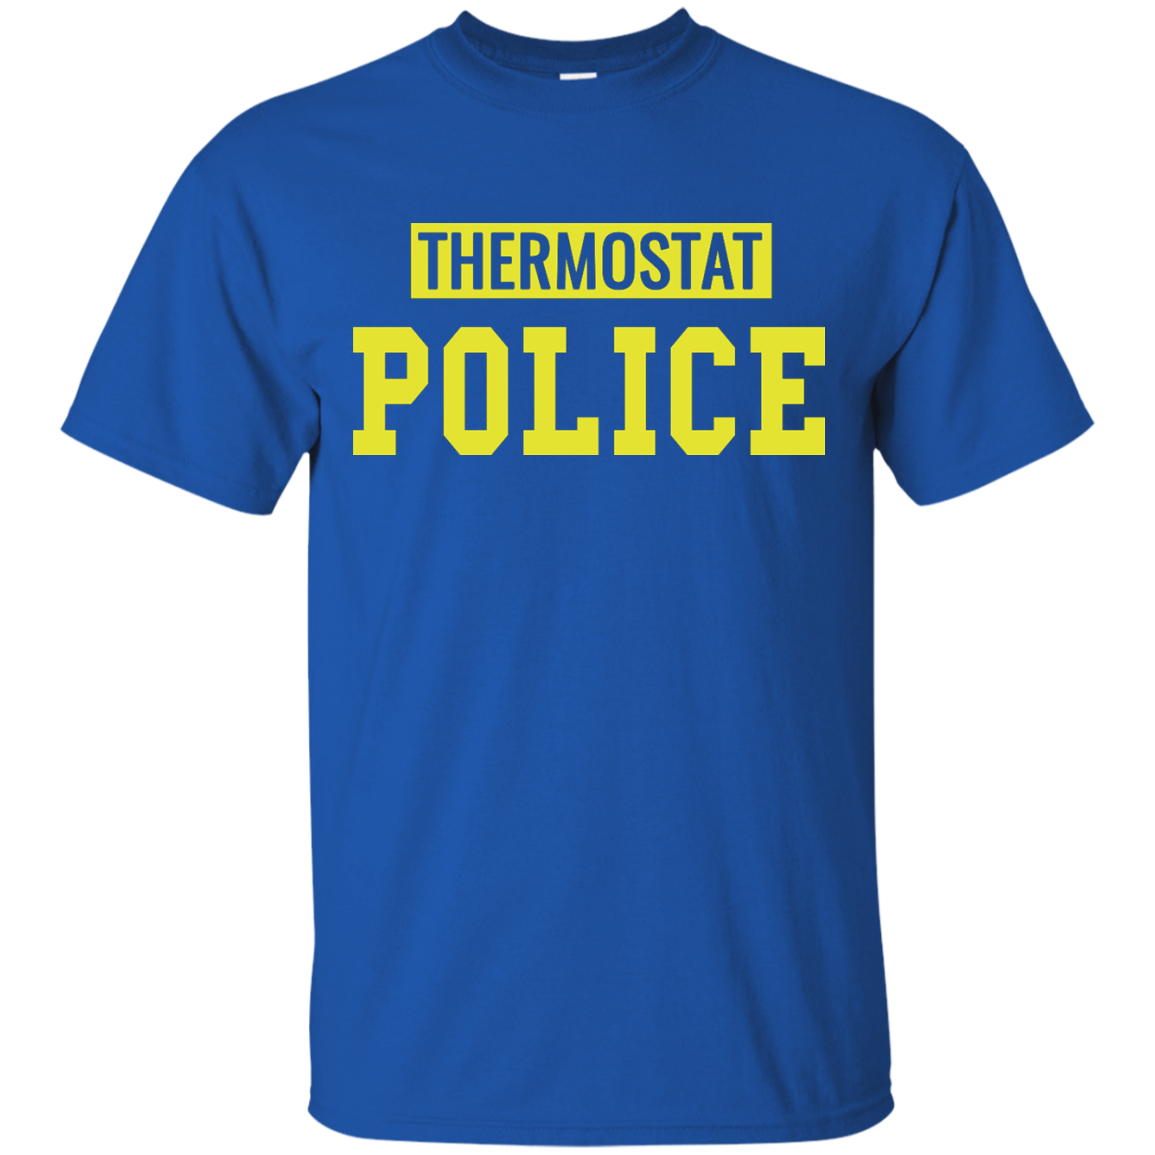 Thermostat Police shirt, sweatshirt